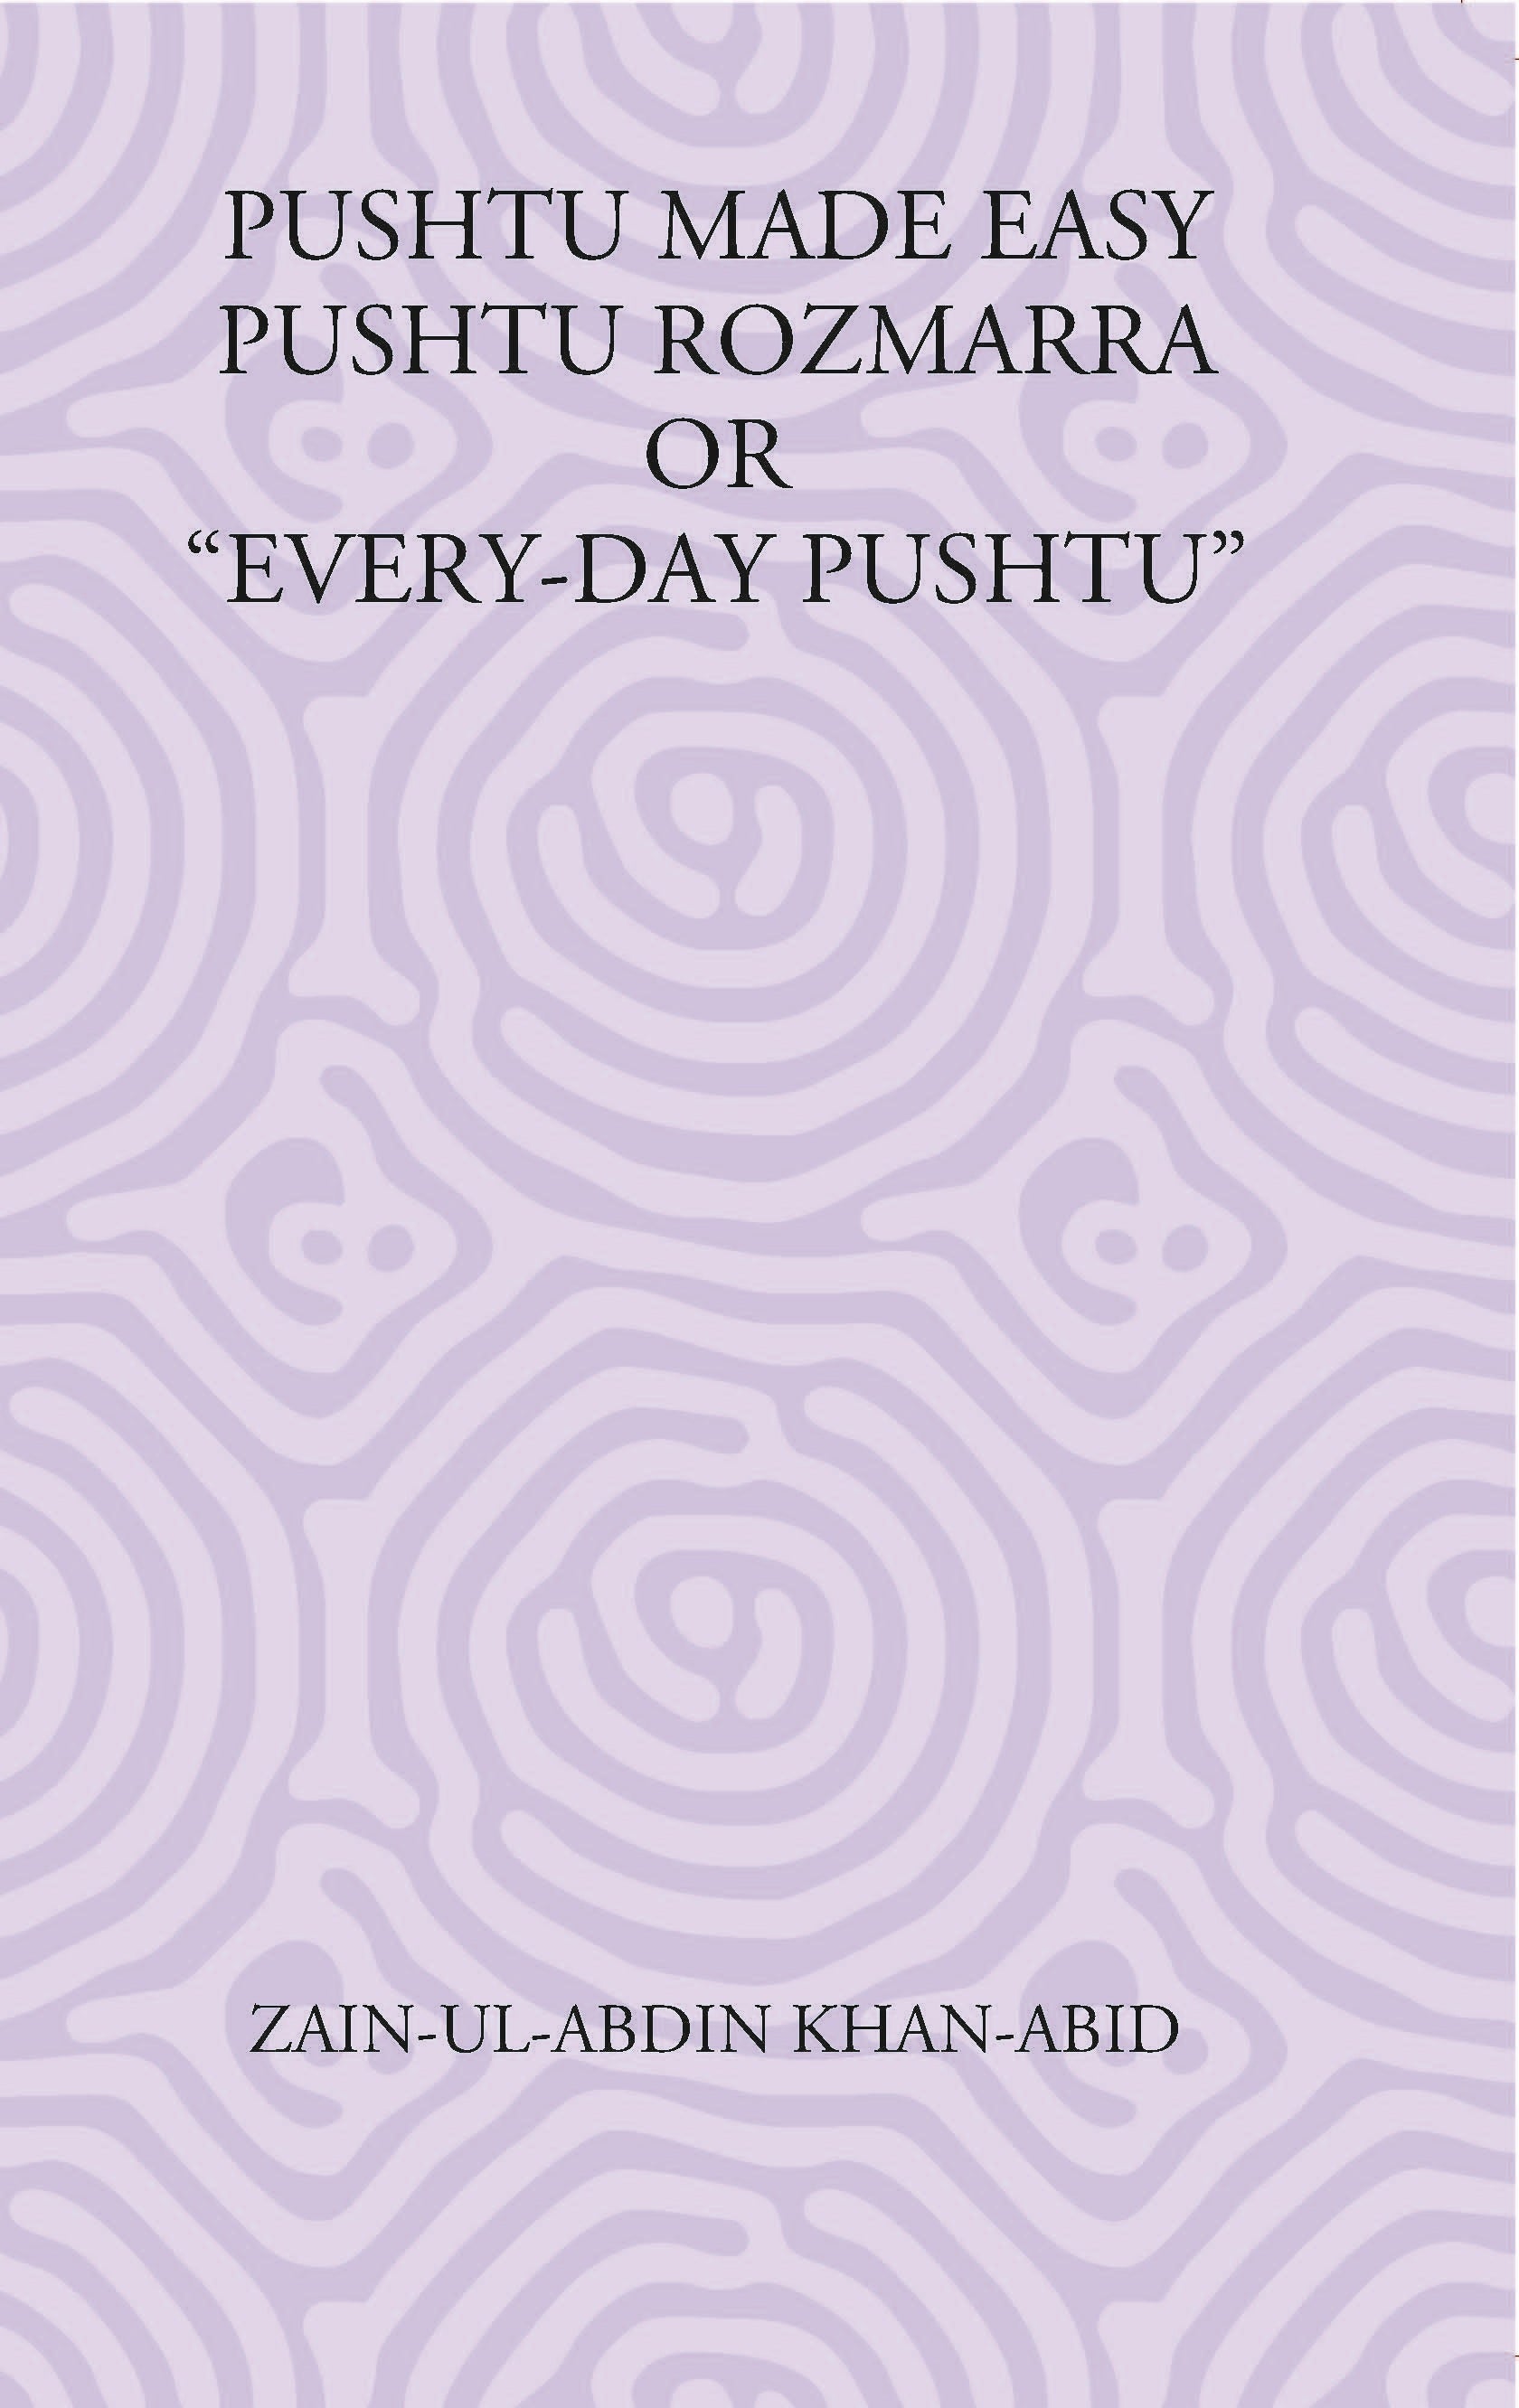 Pushtu Made Easy Pushtu Rozmarra Or Every-Day Pushtu